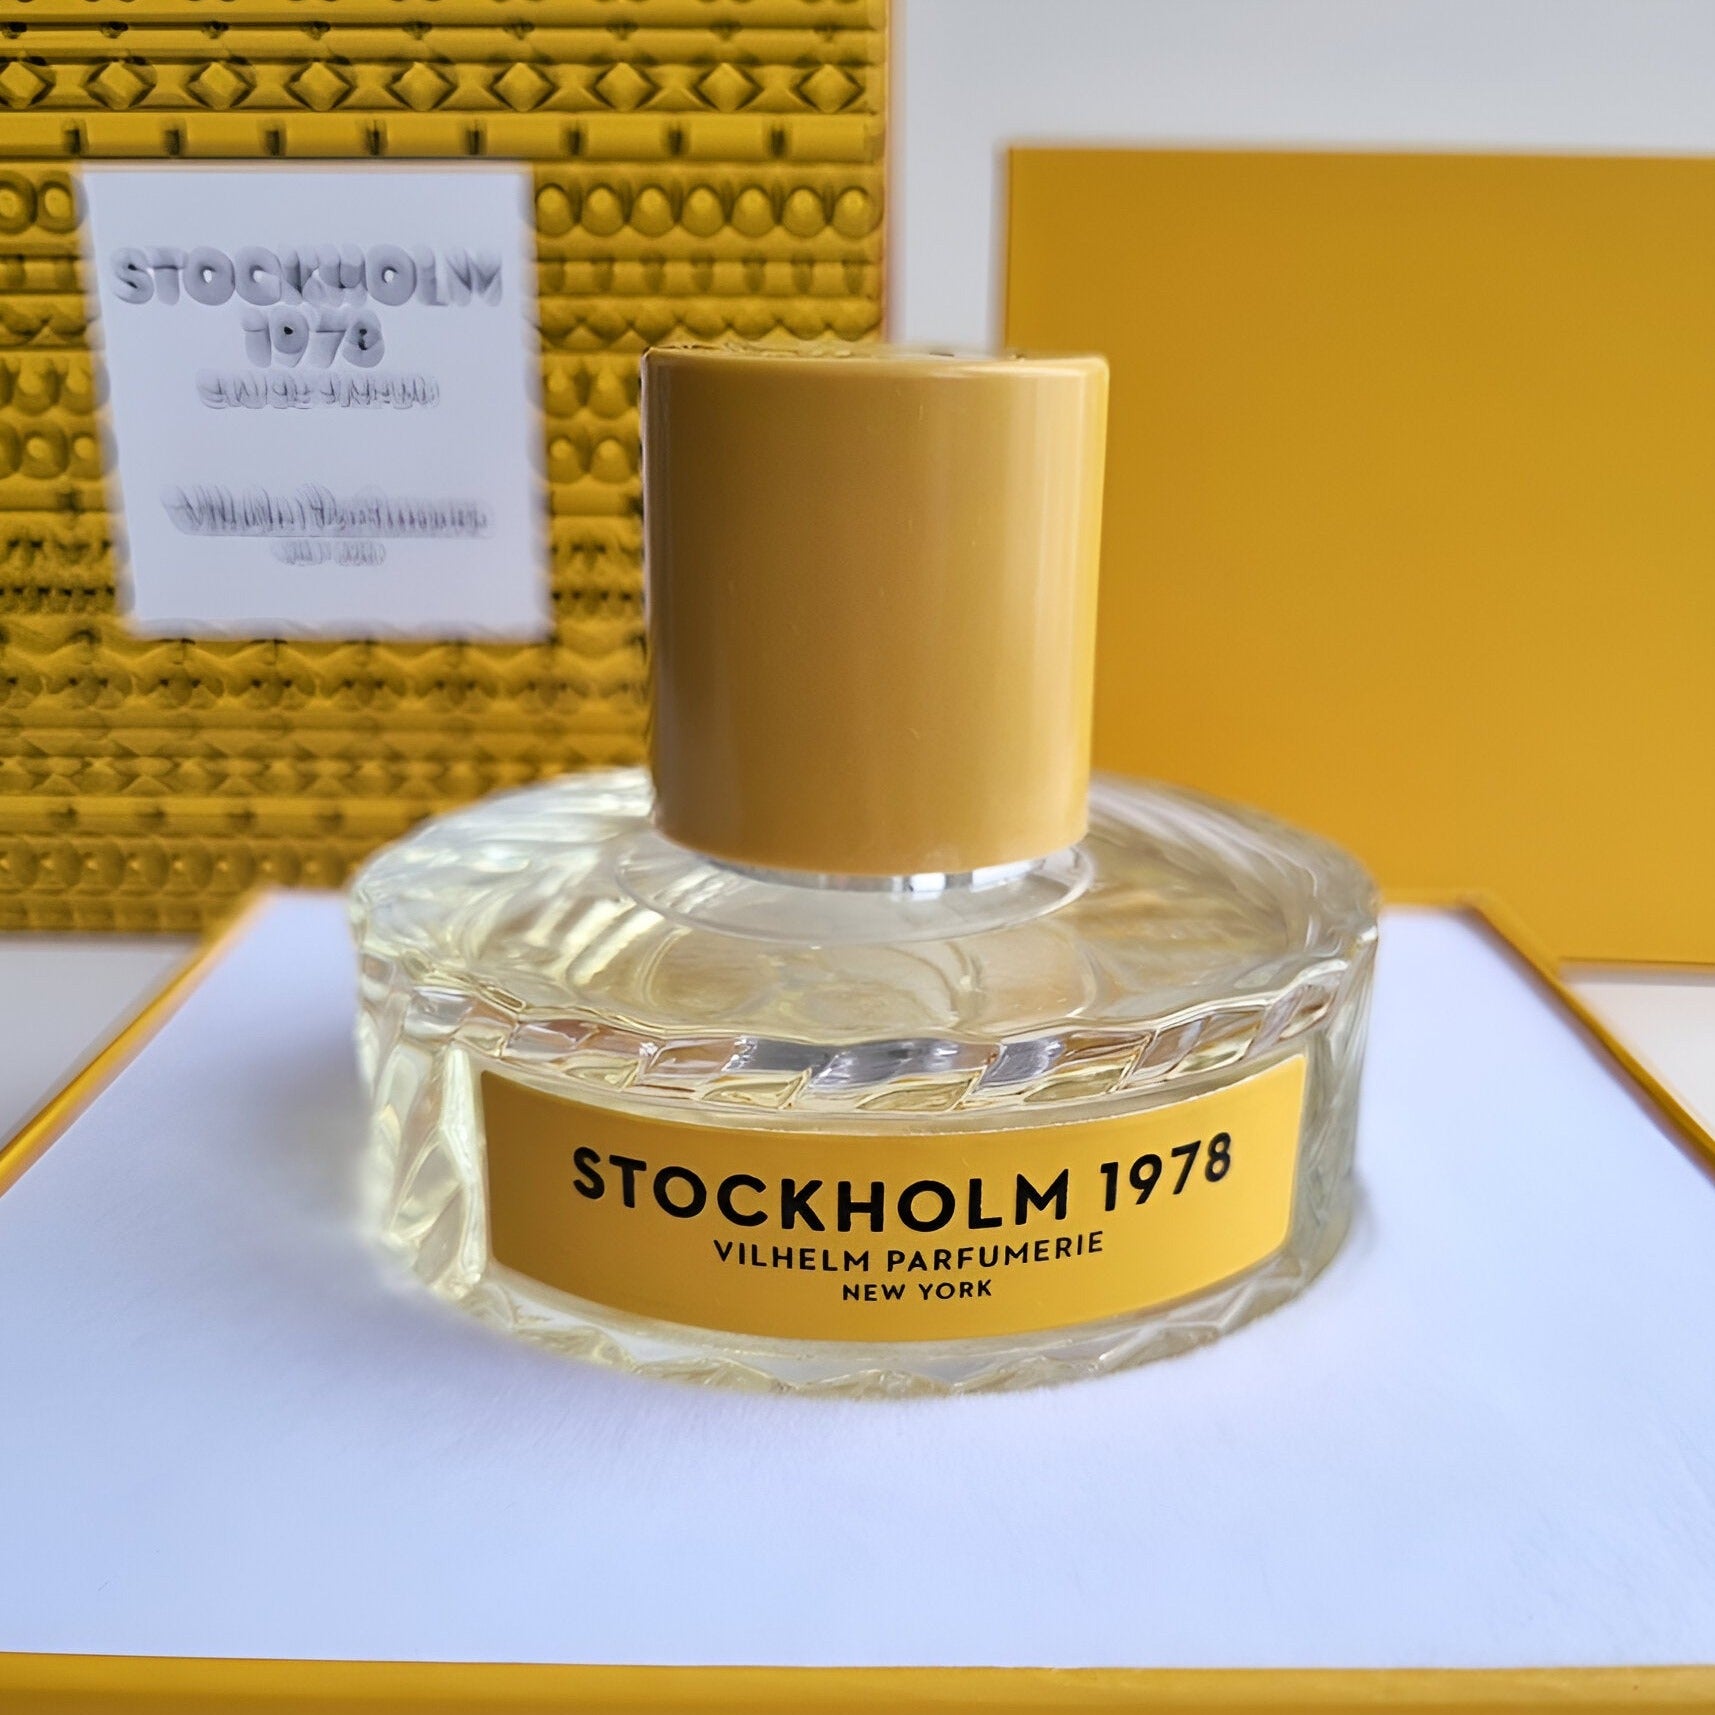 Vilhelm Parfumerie Stockholm 1978 EDP | My Perfume Shop Australia